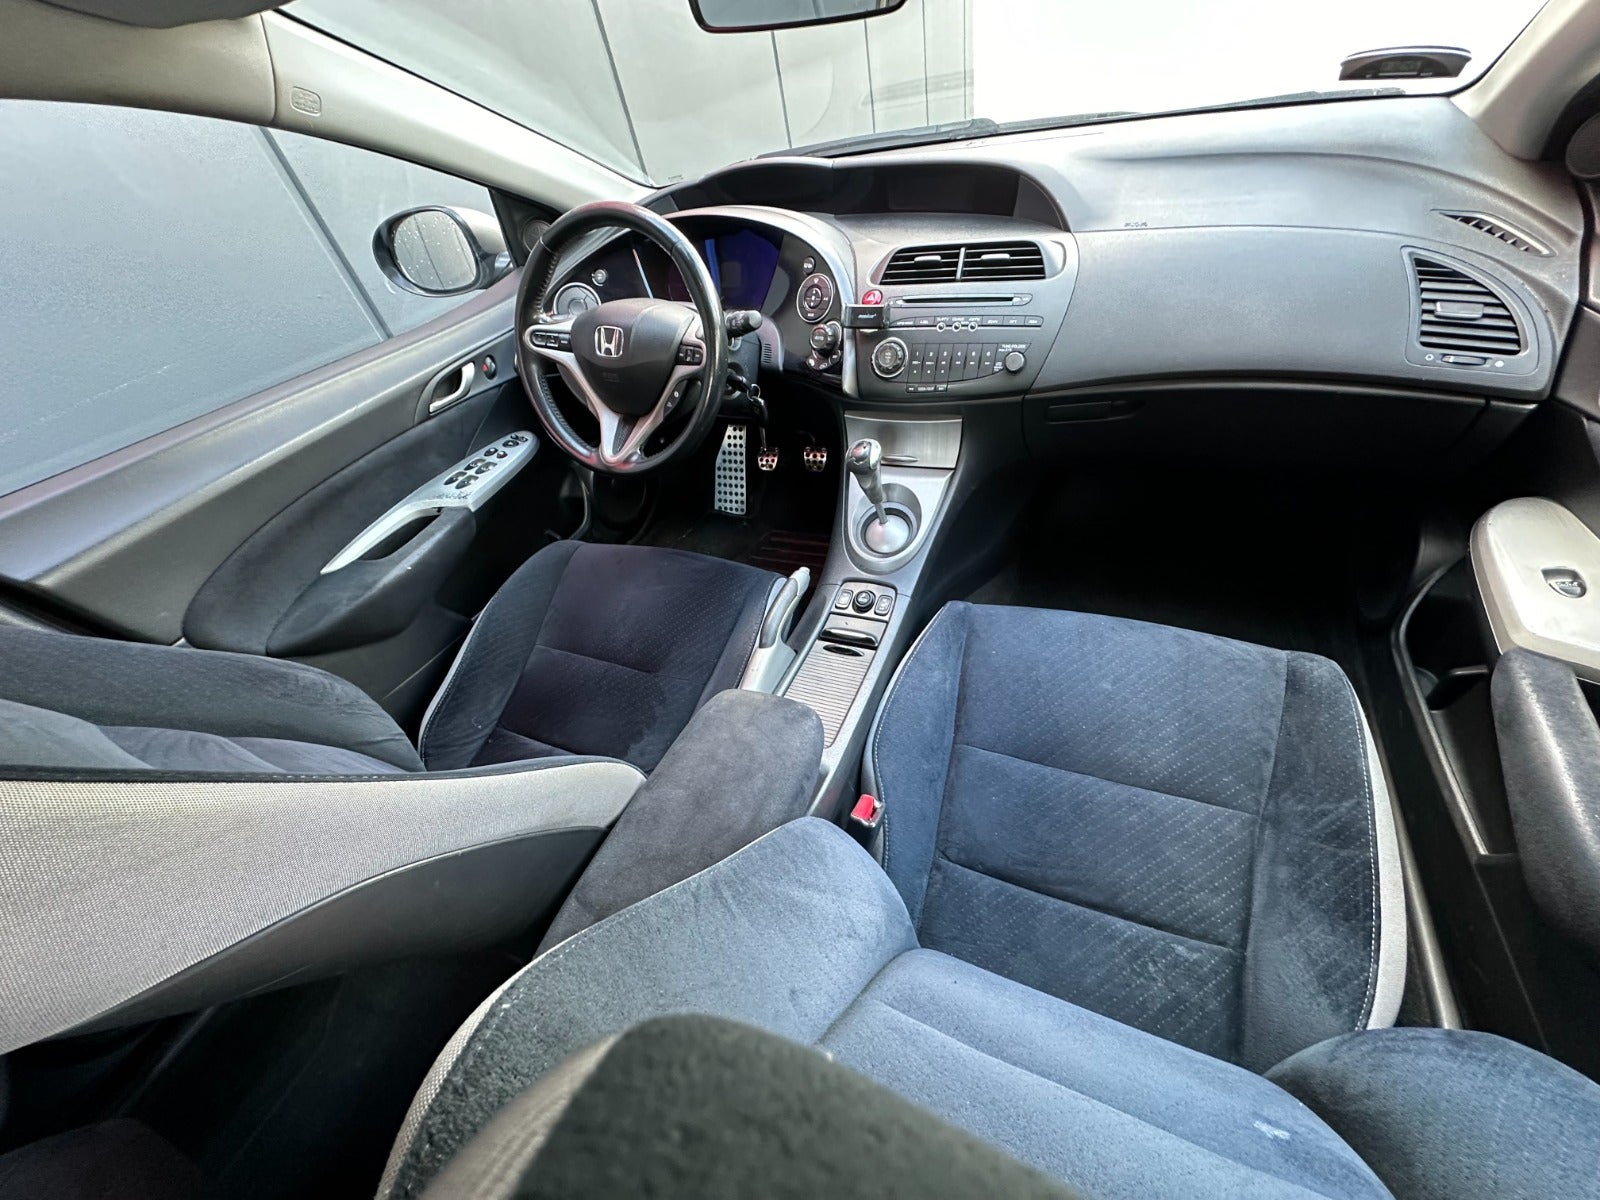 Honda Civic 1,8 Sport Benzin modelår 2007 km 270000 ABS